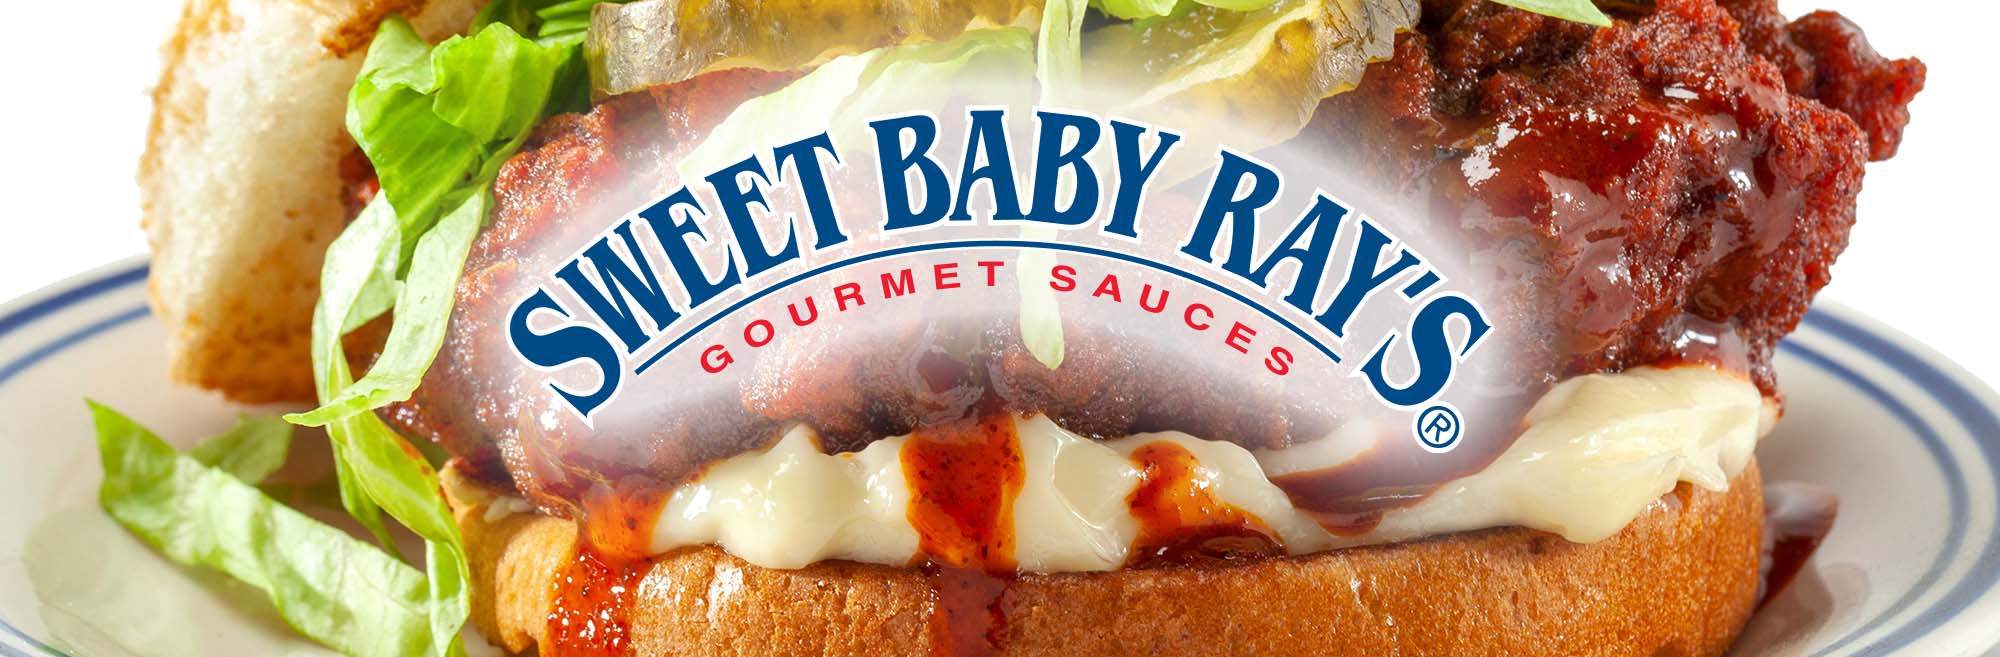 Sweet Baby Ray's Nashville Hot Sauce Header